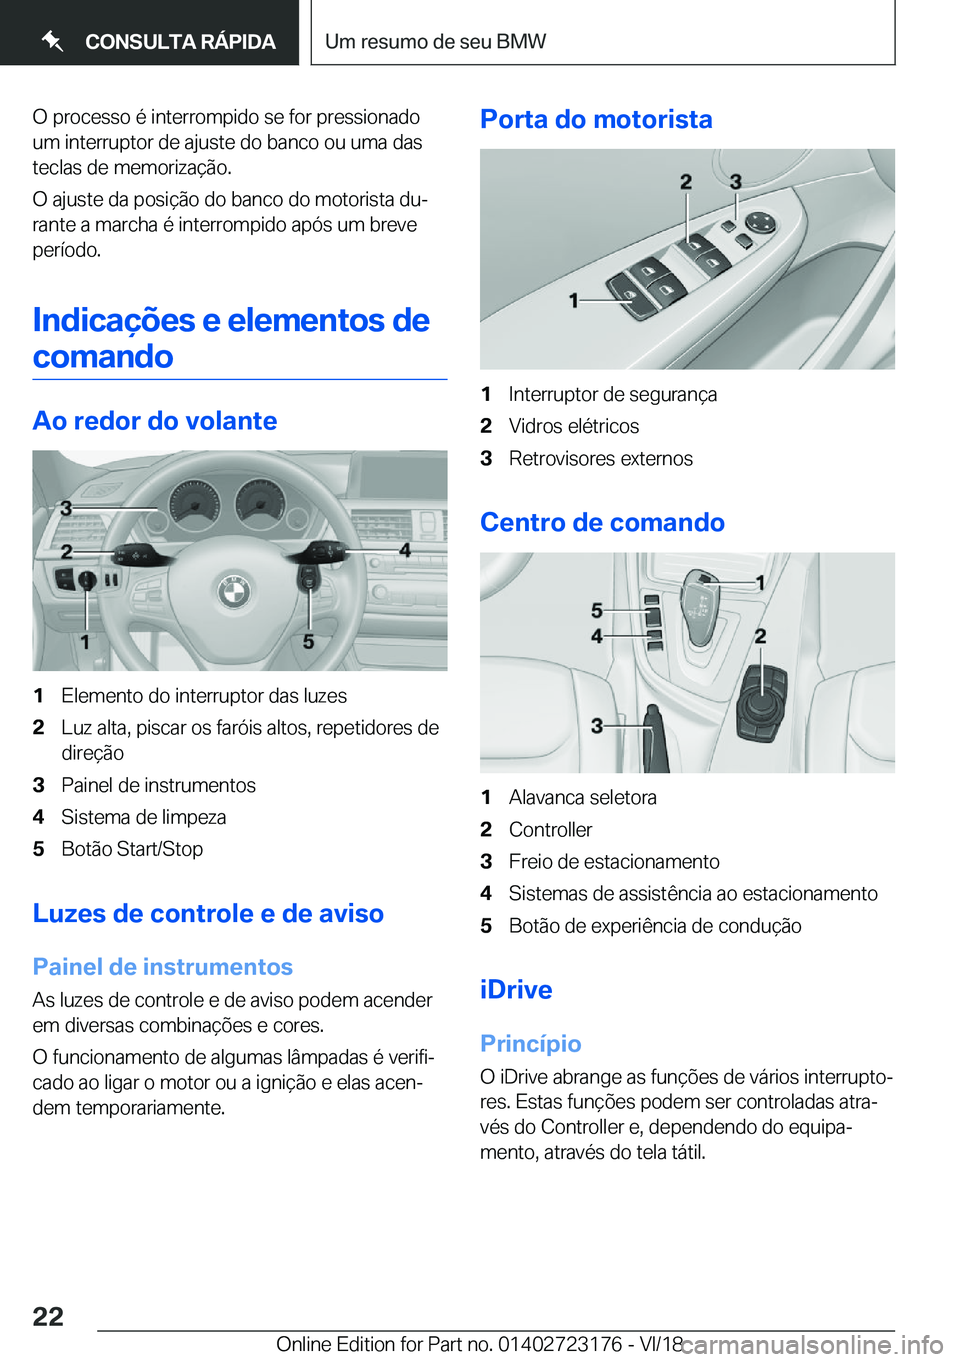 BMW 4 SERIES GRAN COUPE 2019  Manual do condutor (in Portuguese) �O��p�r�o�c�e�s�s�o��é��i�n�t�e�r�r�o�m�p�i�d�o��s�e��f�o�r��p�r�e�s�s�i�o�n�a�d�o
�u�m��i�n�t�e�r�r�u�p�t�o�r��d�e��a�j�u�s�t�e��d�o��b�a�n�c�o��o�u��u�m�a��d�a�s
�t�e�c�l�a�s��d�e��